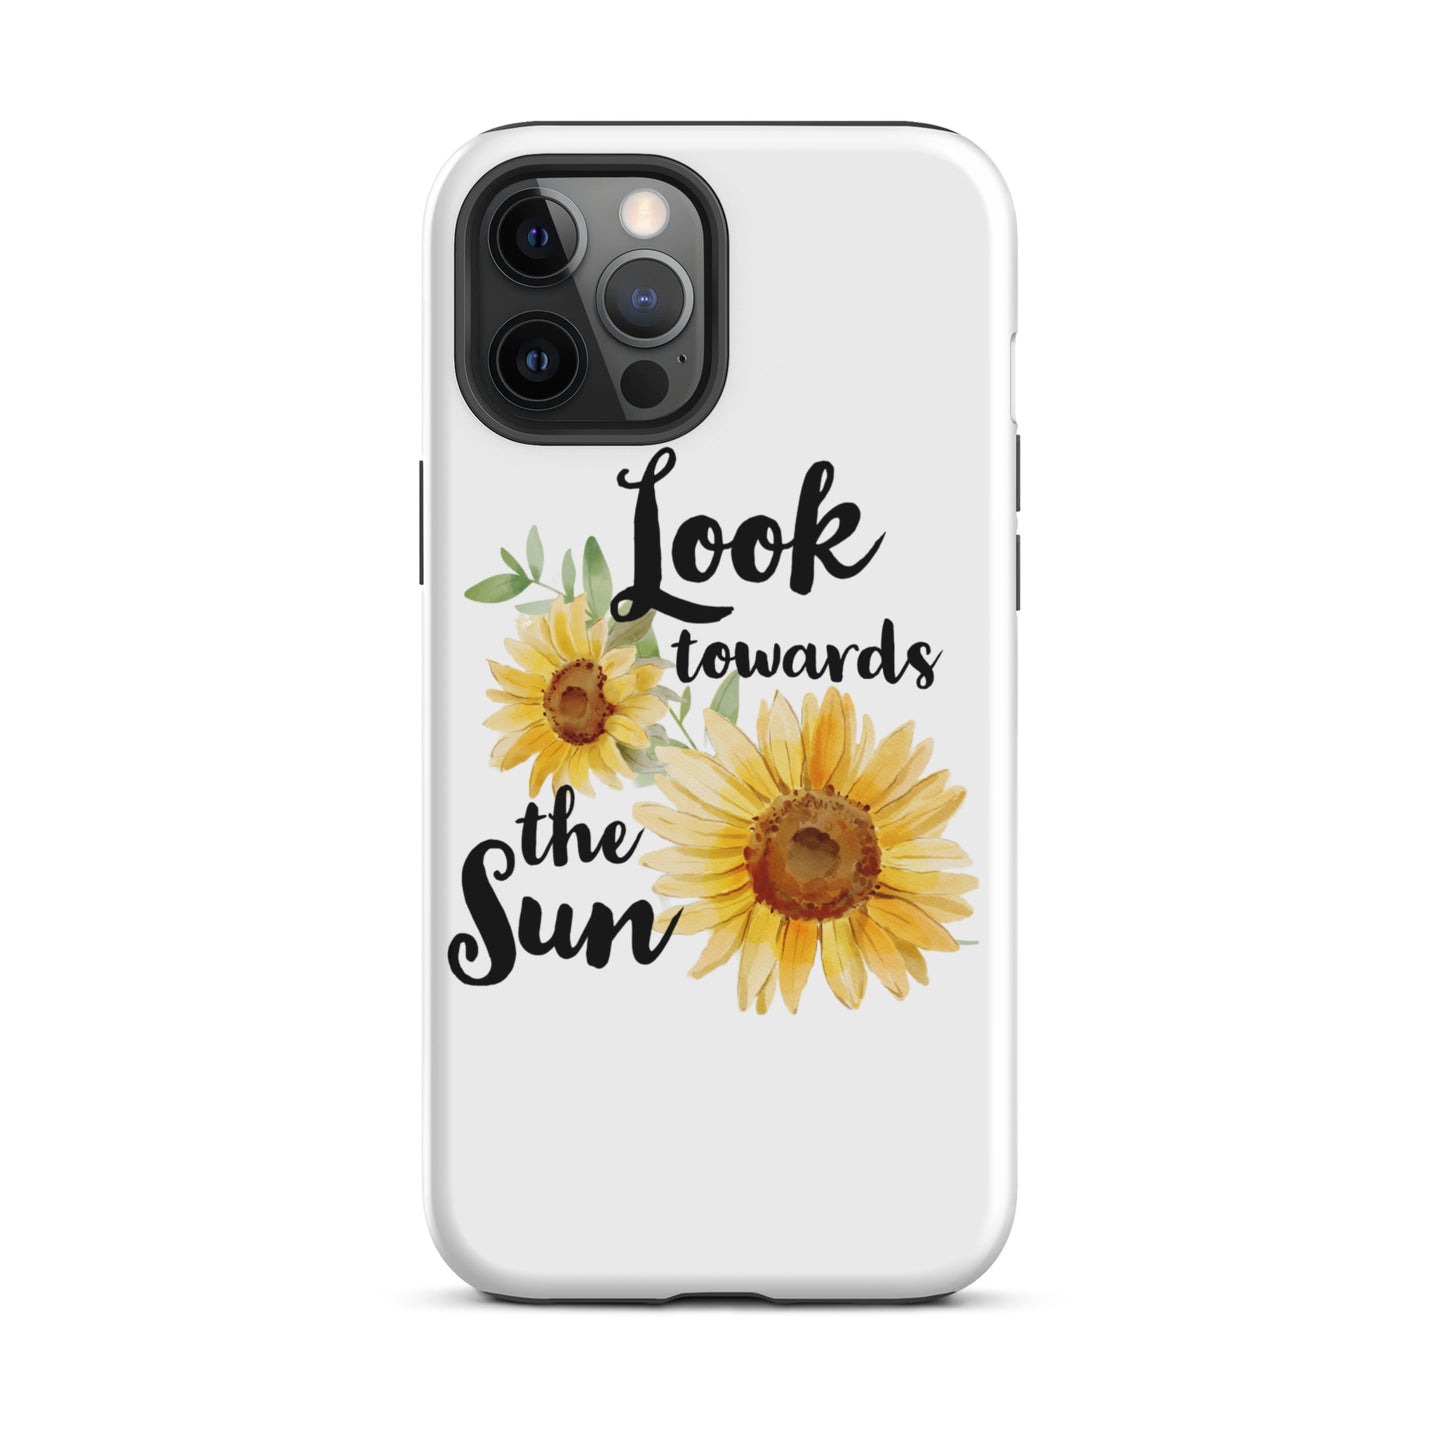 Look Towards The Sun(flower) iPhone case